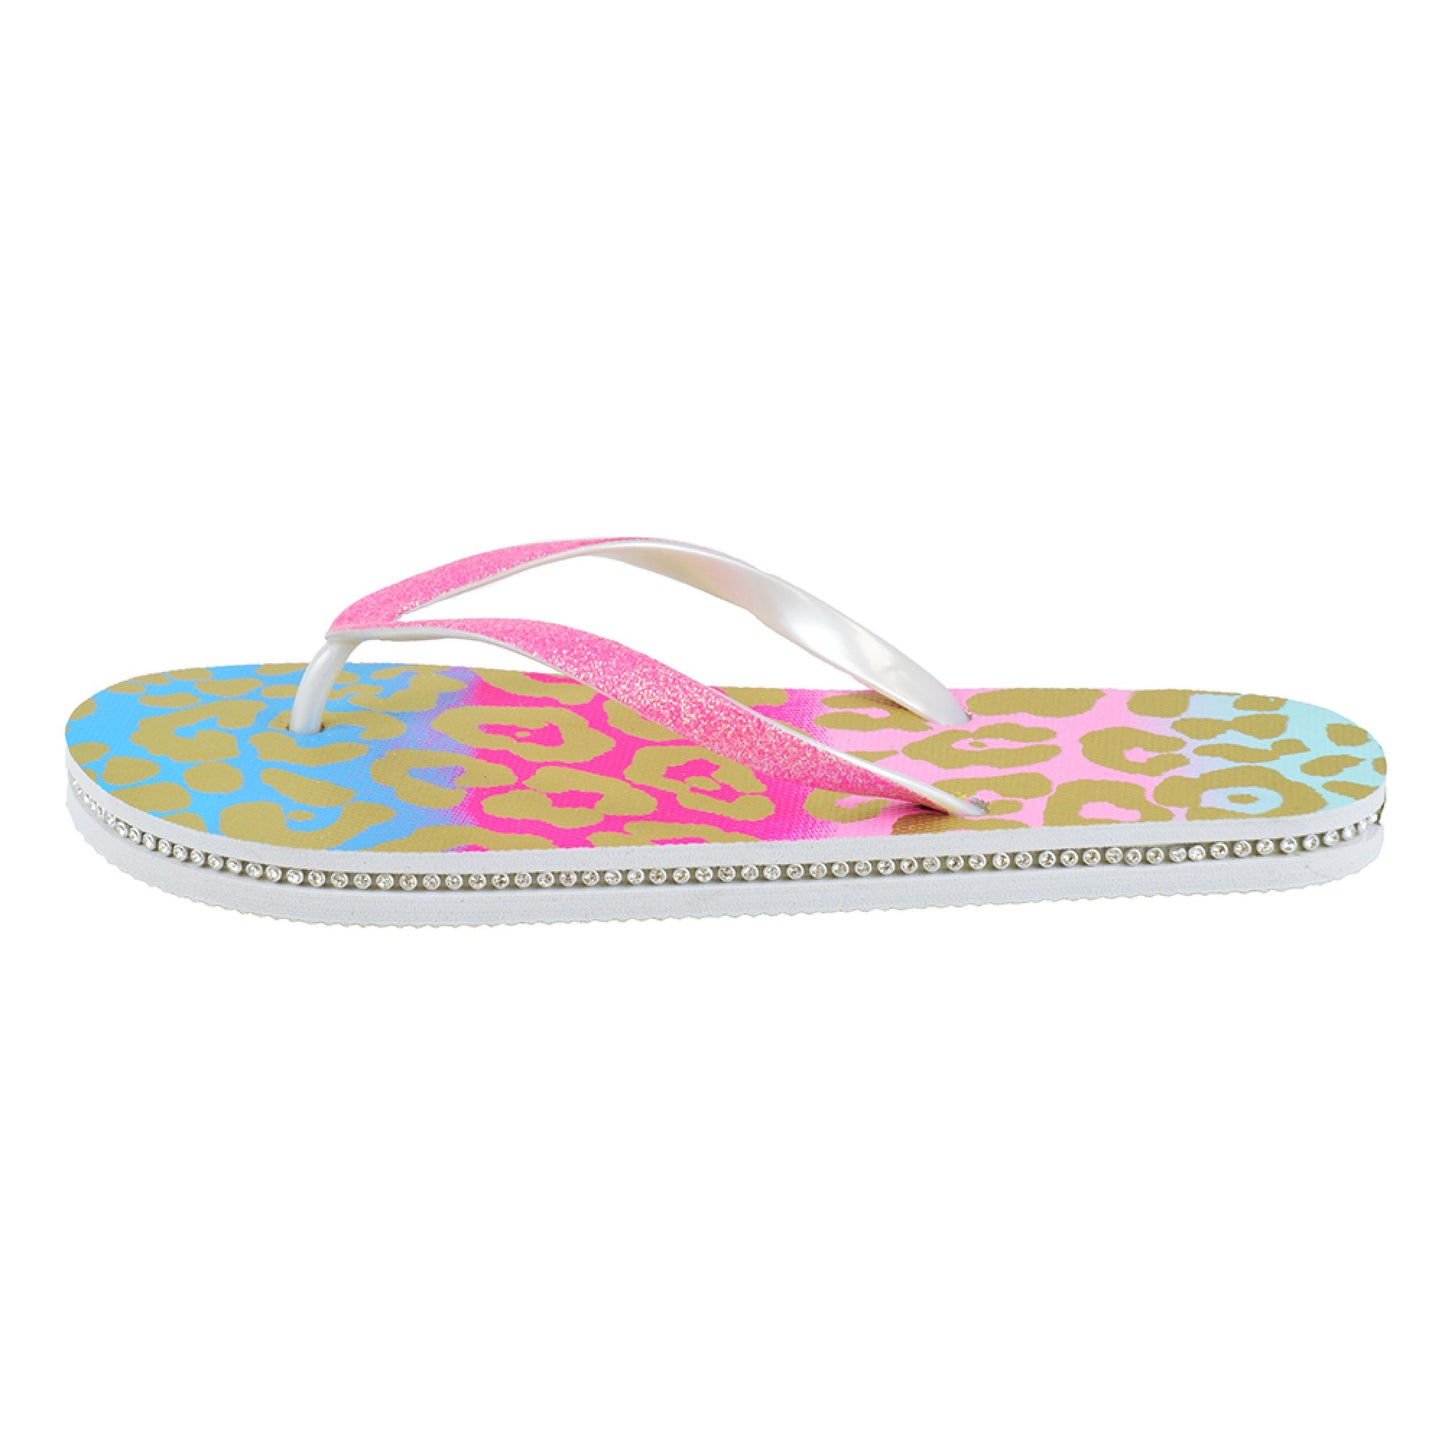 Ladies Leopard Print Glittery Strap Summer Flip Flops Beach Sandals with Diamantes